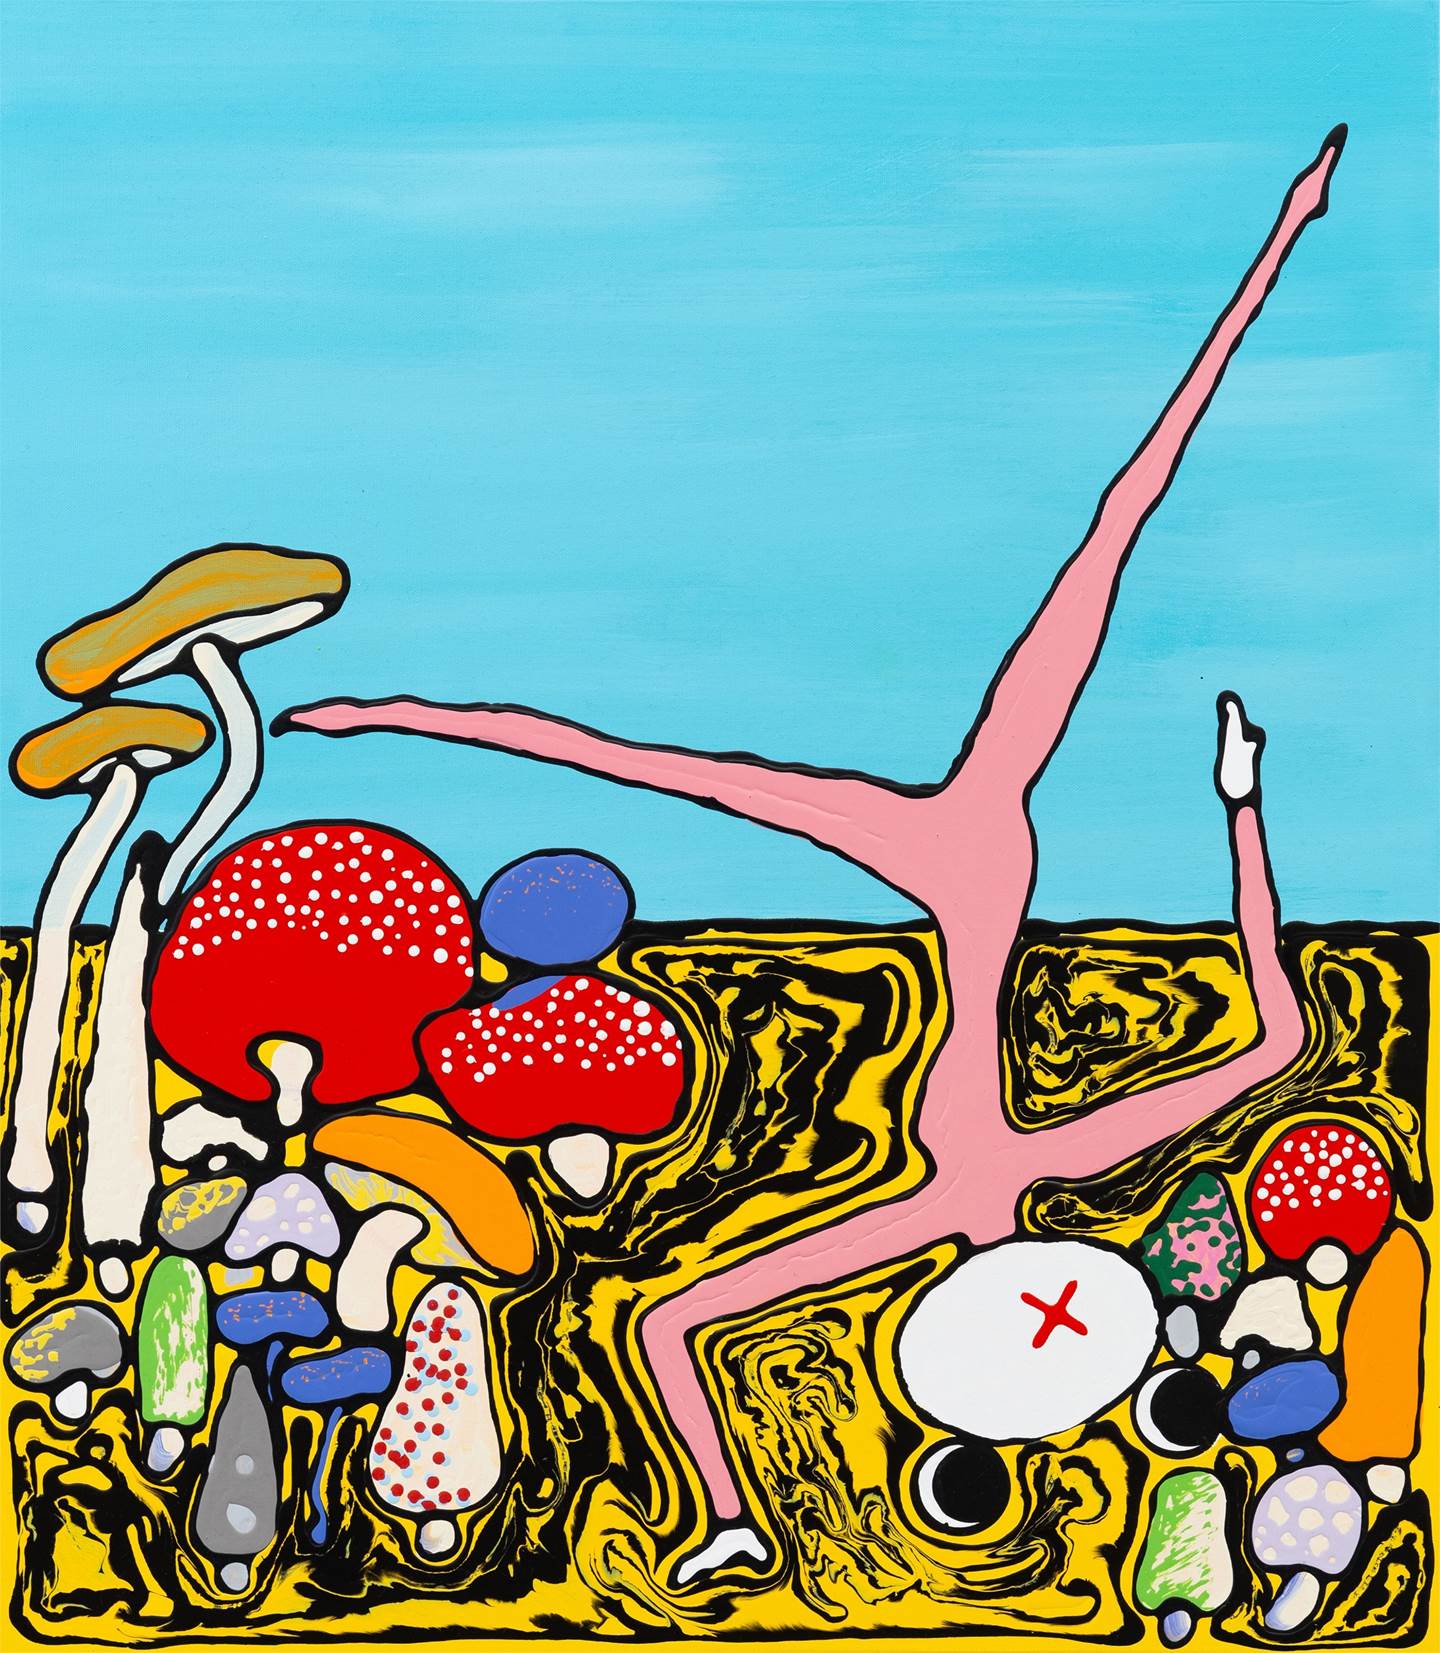 Mushrooms and the cloud #4, original   Painting by Mario Louro